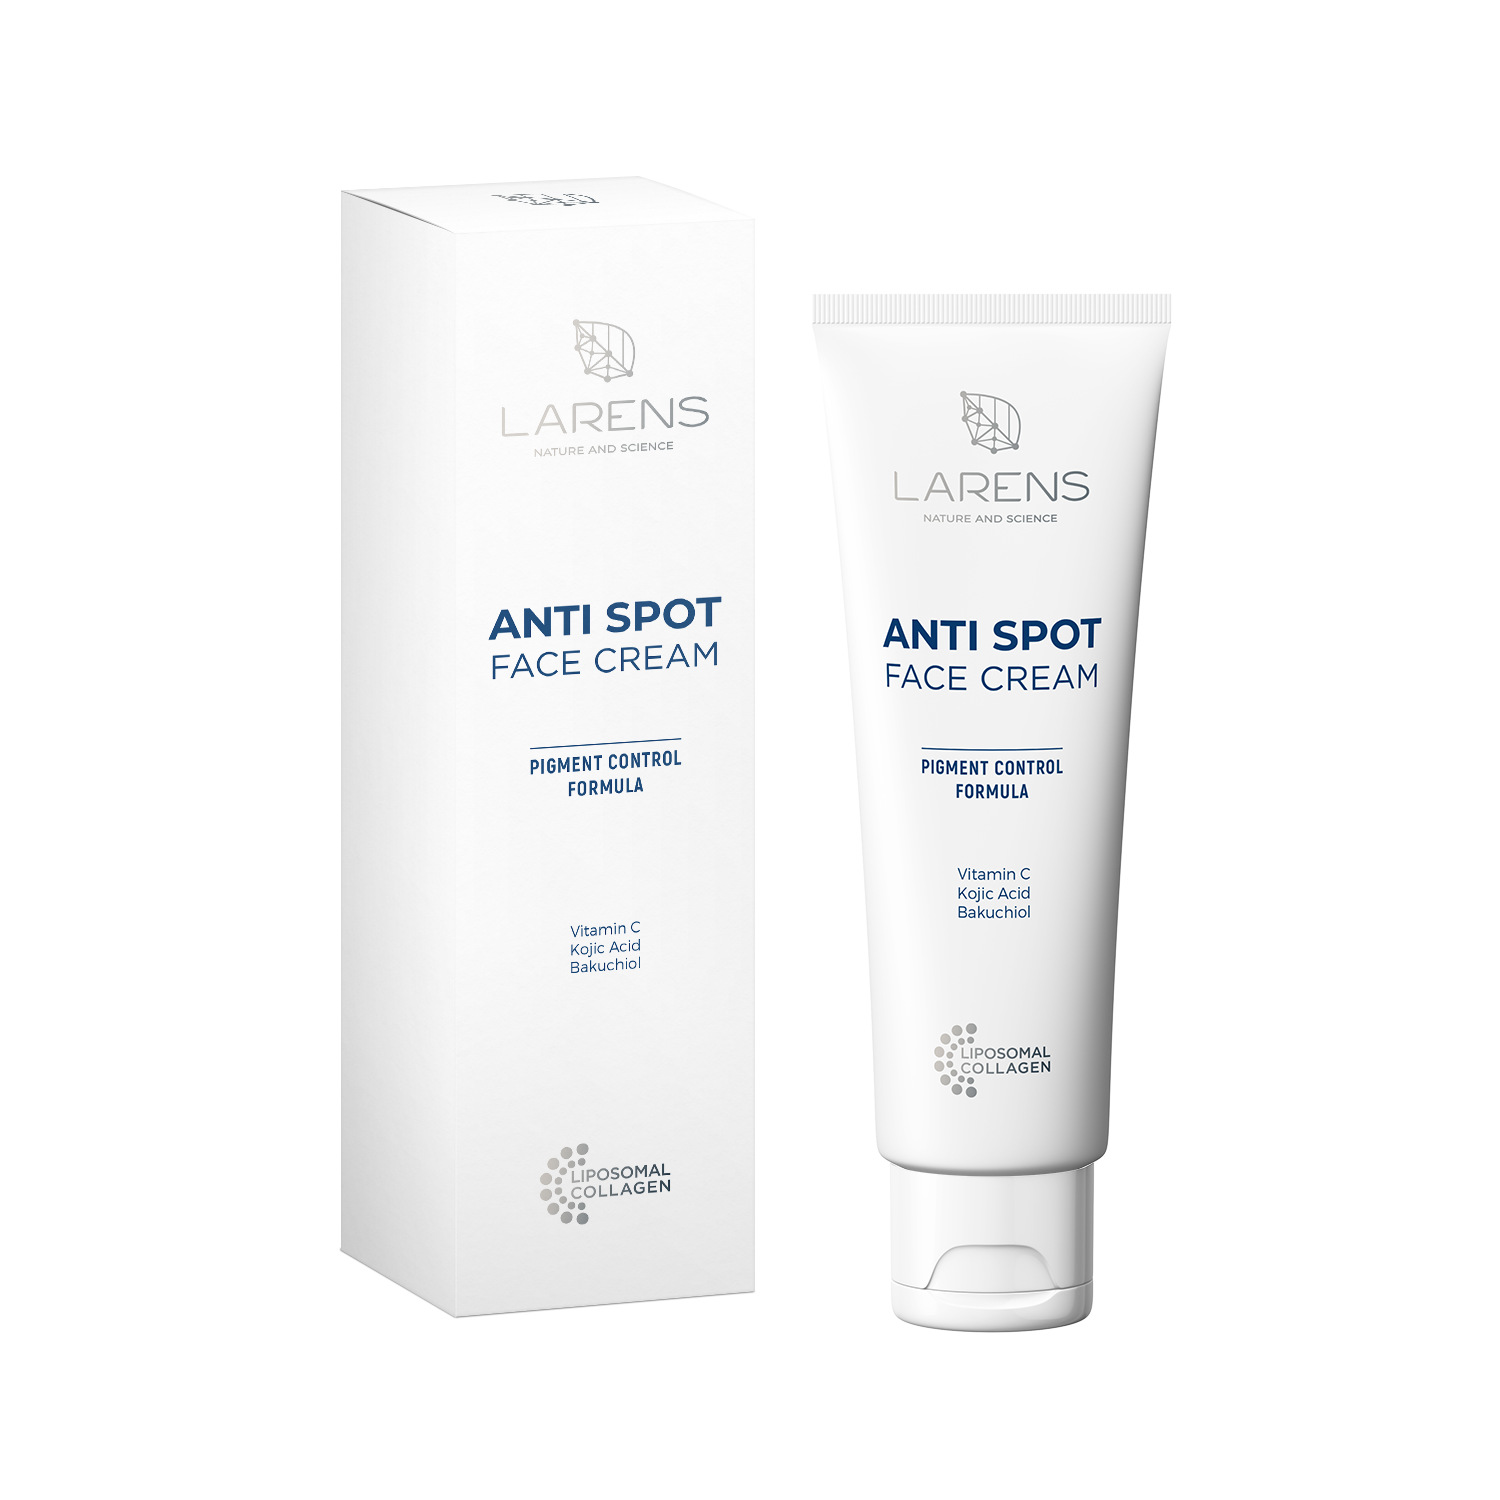 Anti Spot Face Cream